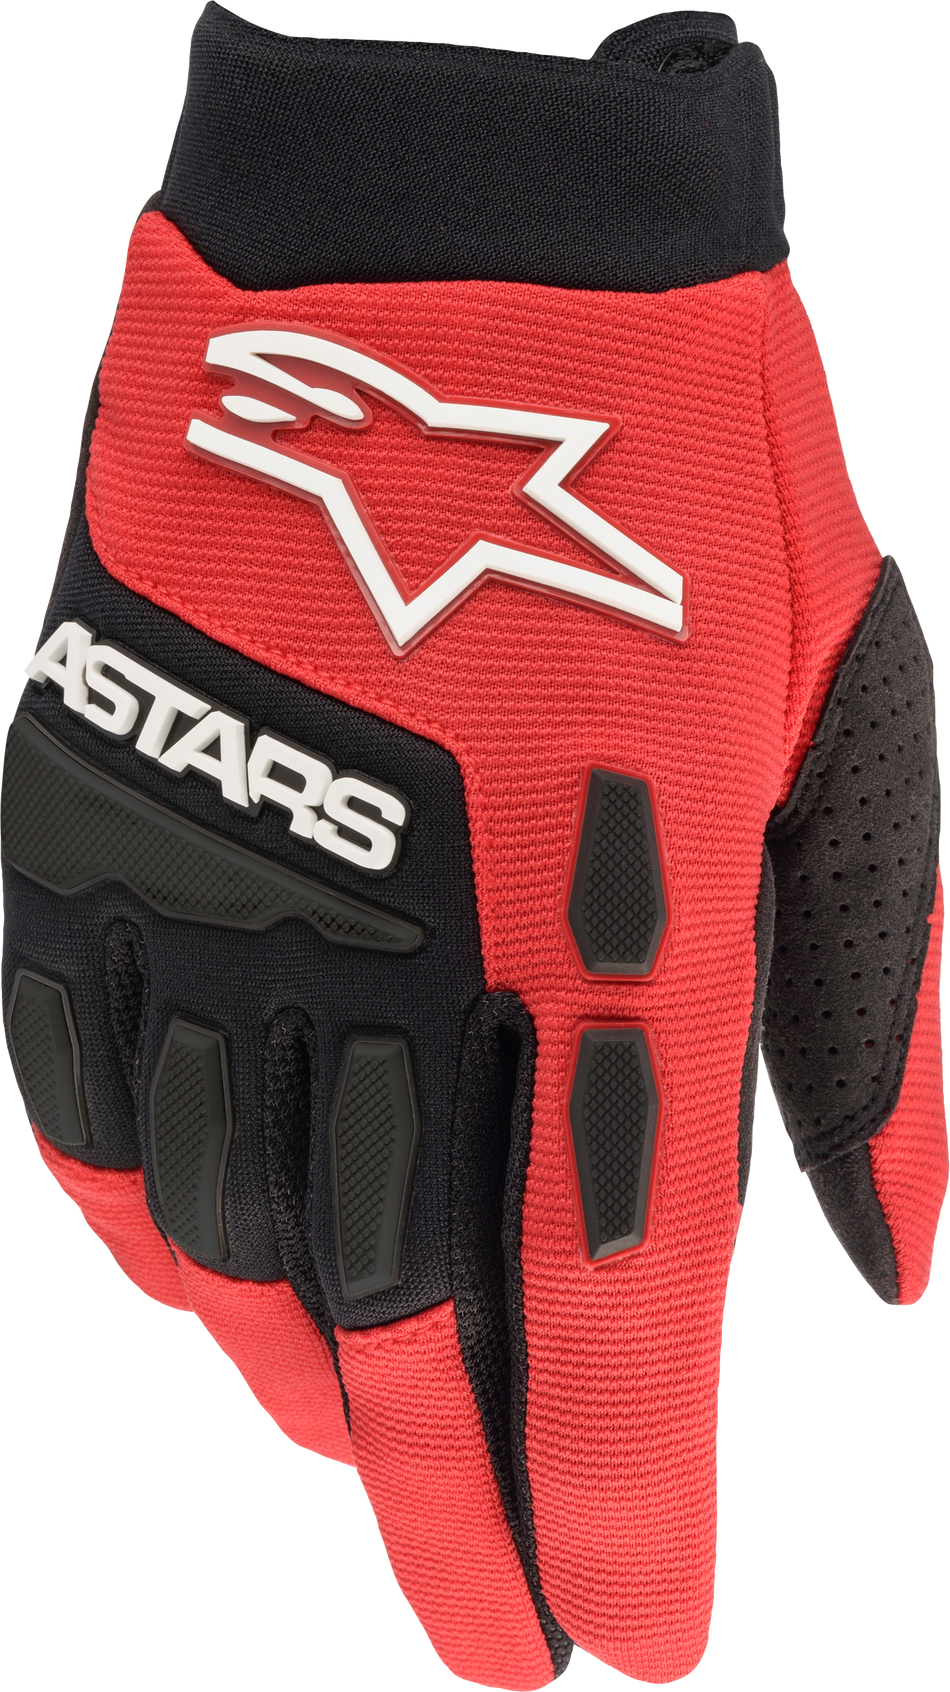 ALPINESTARS Full Bore Gloves Bright Red/Black Sm 3563622-3031-S